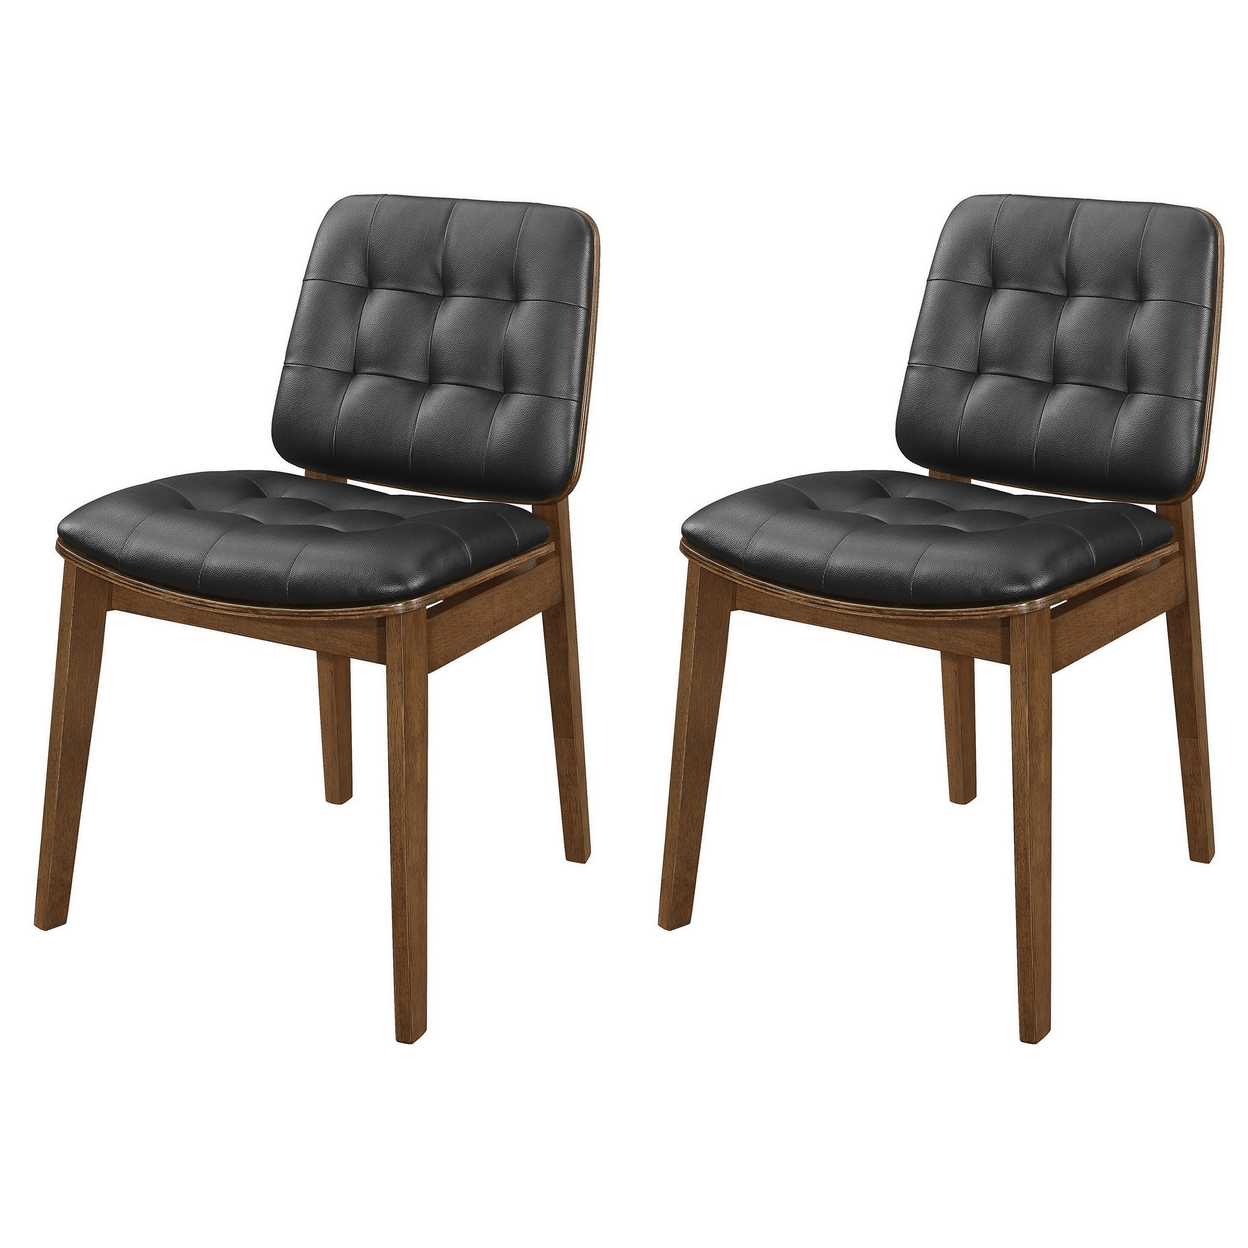 18 Inch Dining Chair, Set Of 2, Black Vegan Faux Leather, Tufted Seat - Saltoro Sherpi